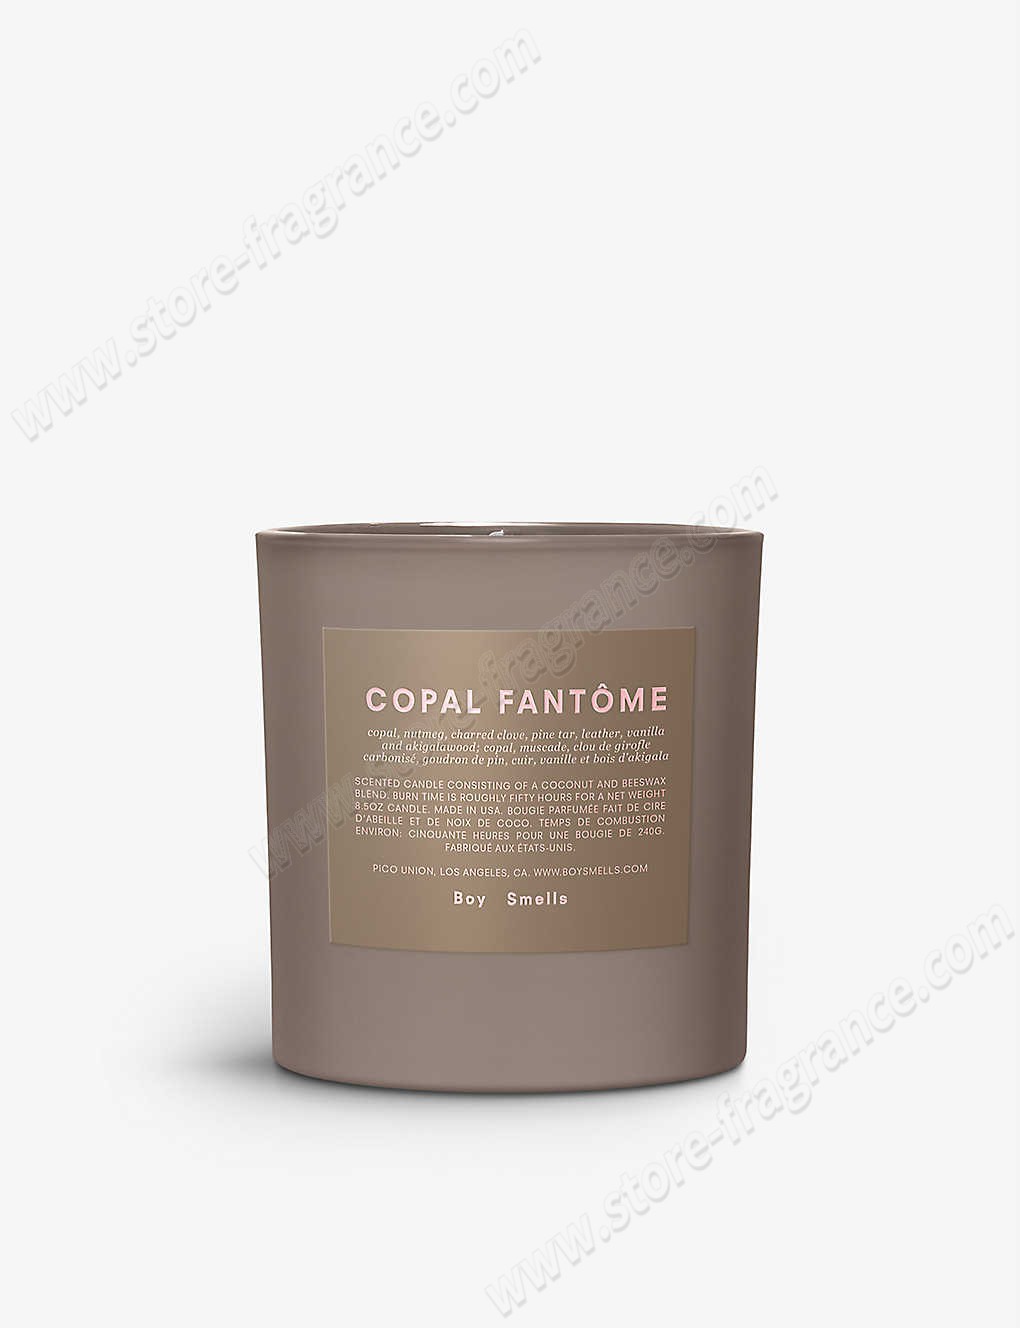 BOY SMELLS/Copal Fantôme scented candle 240g ✿ Discount Store - BOY SMELLS/Copal Fantôme scented candle 240g ✿ Discount Store